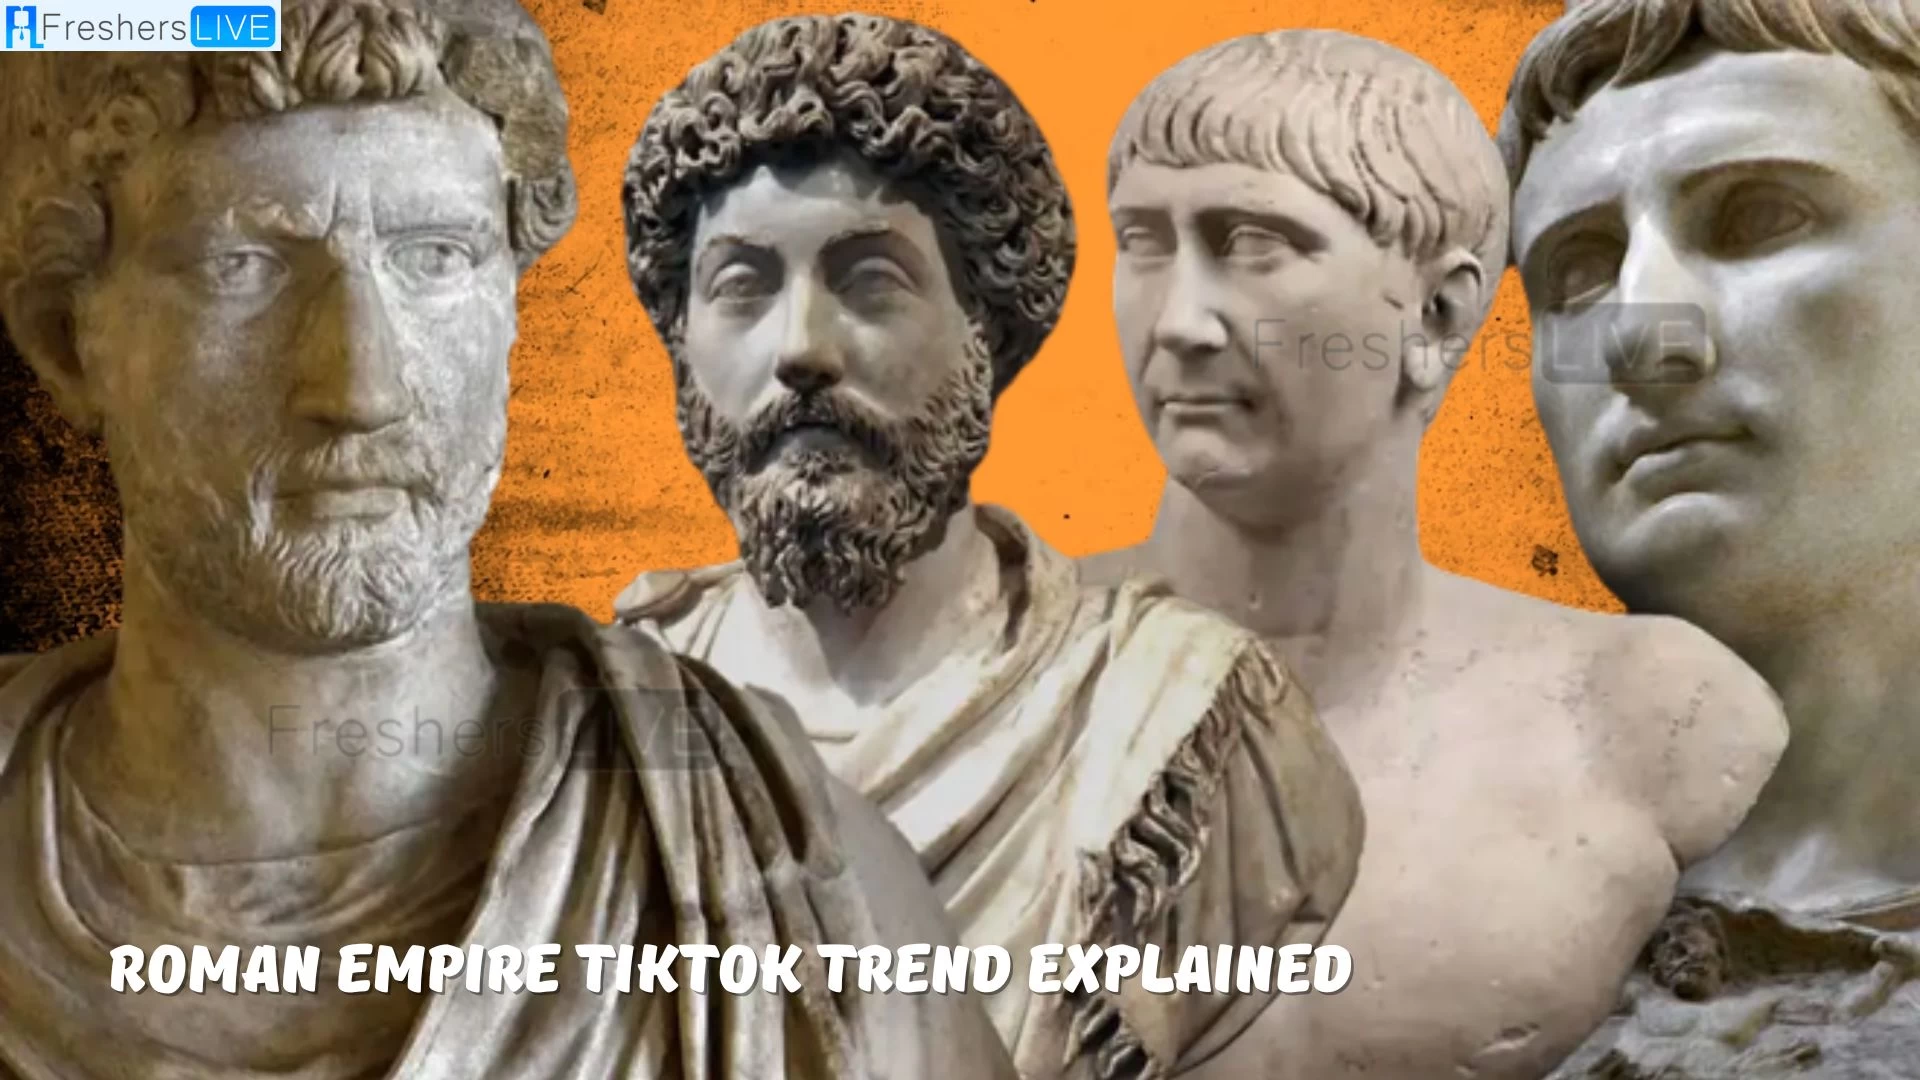 Roman Empire Tiktok Trend Explained, What is the Roman Empire Tiktok Trend?